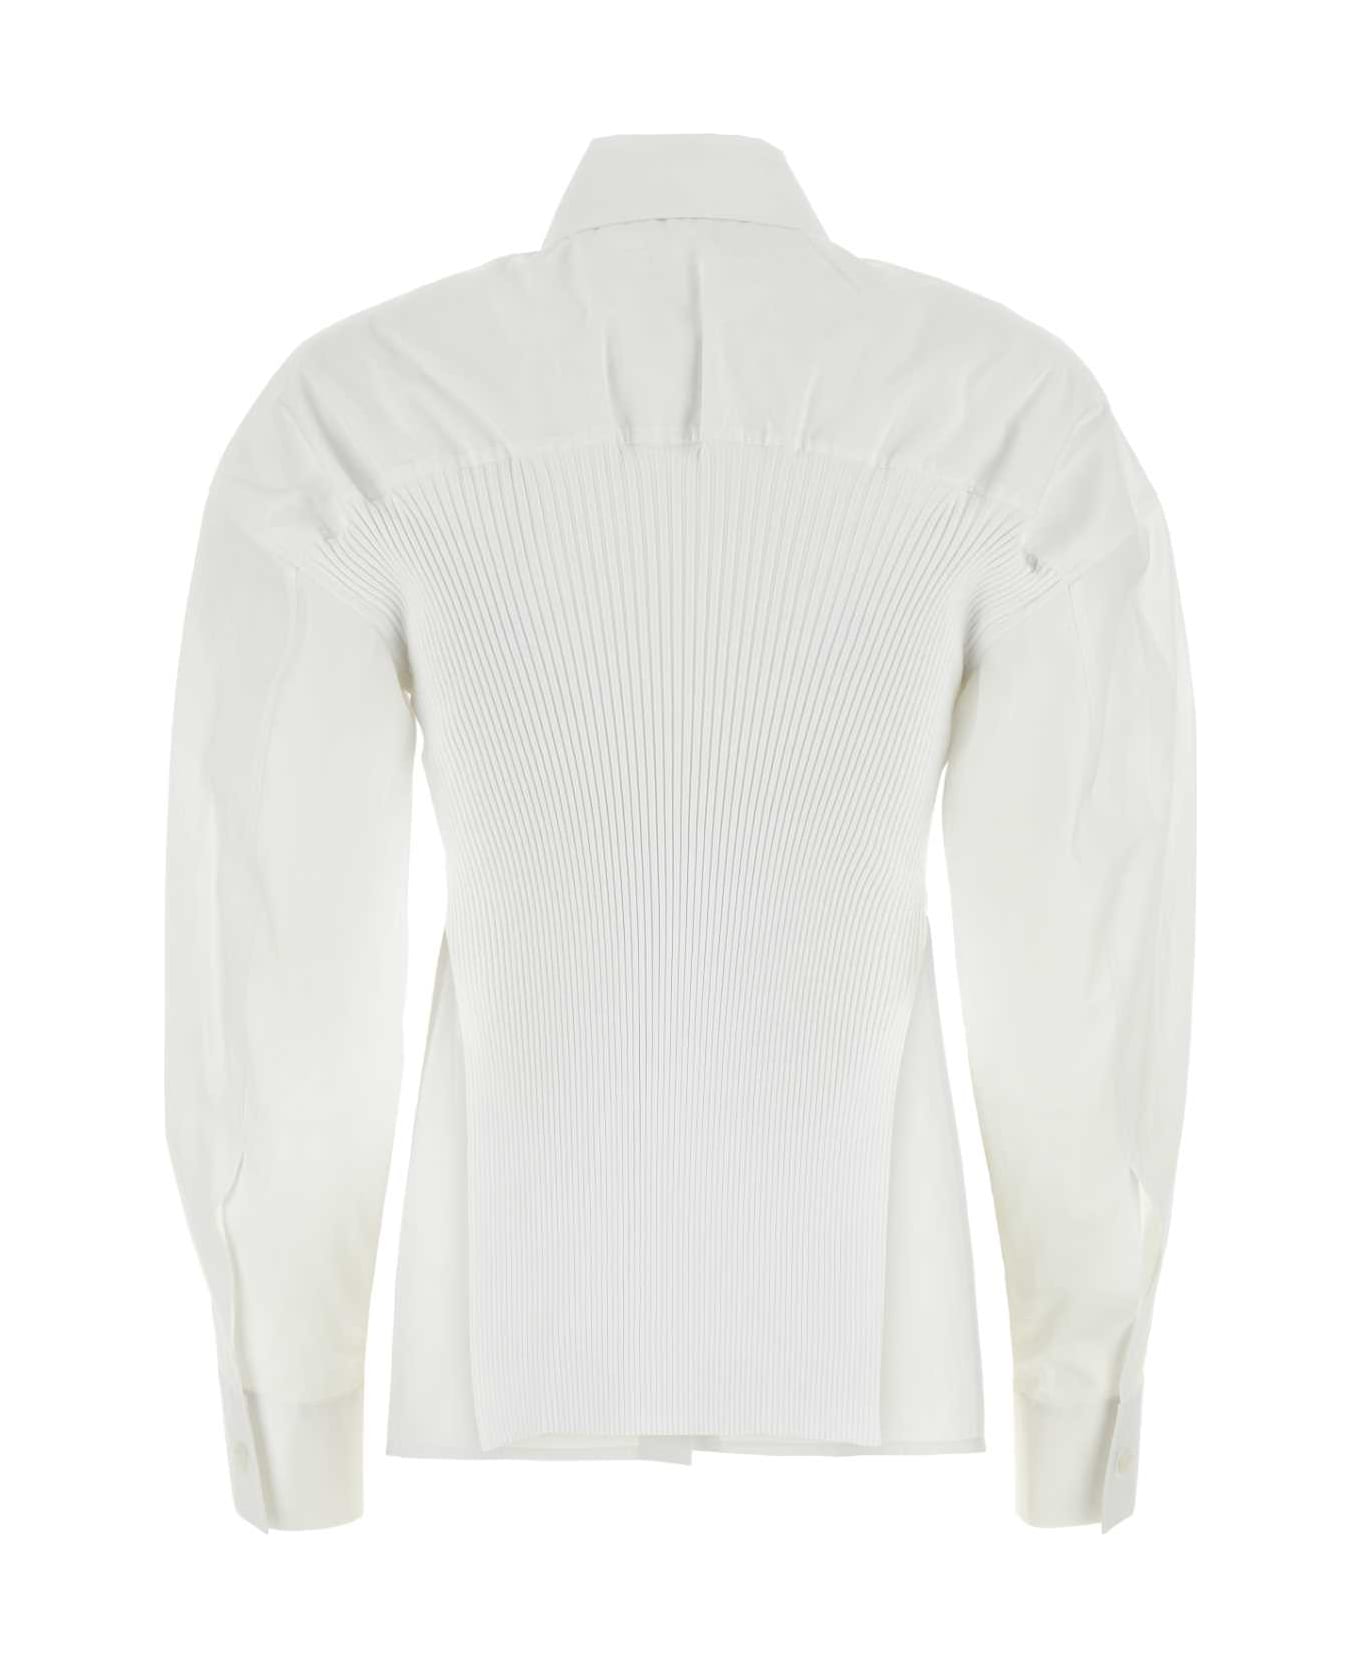 Alexander Wang White Poplin Shirt - White シャツ